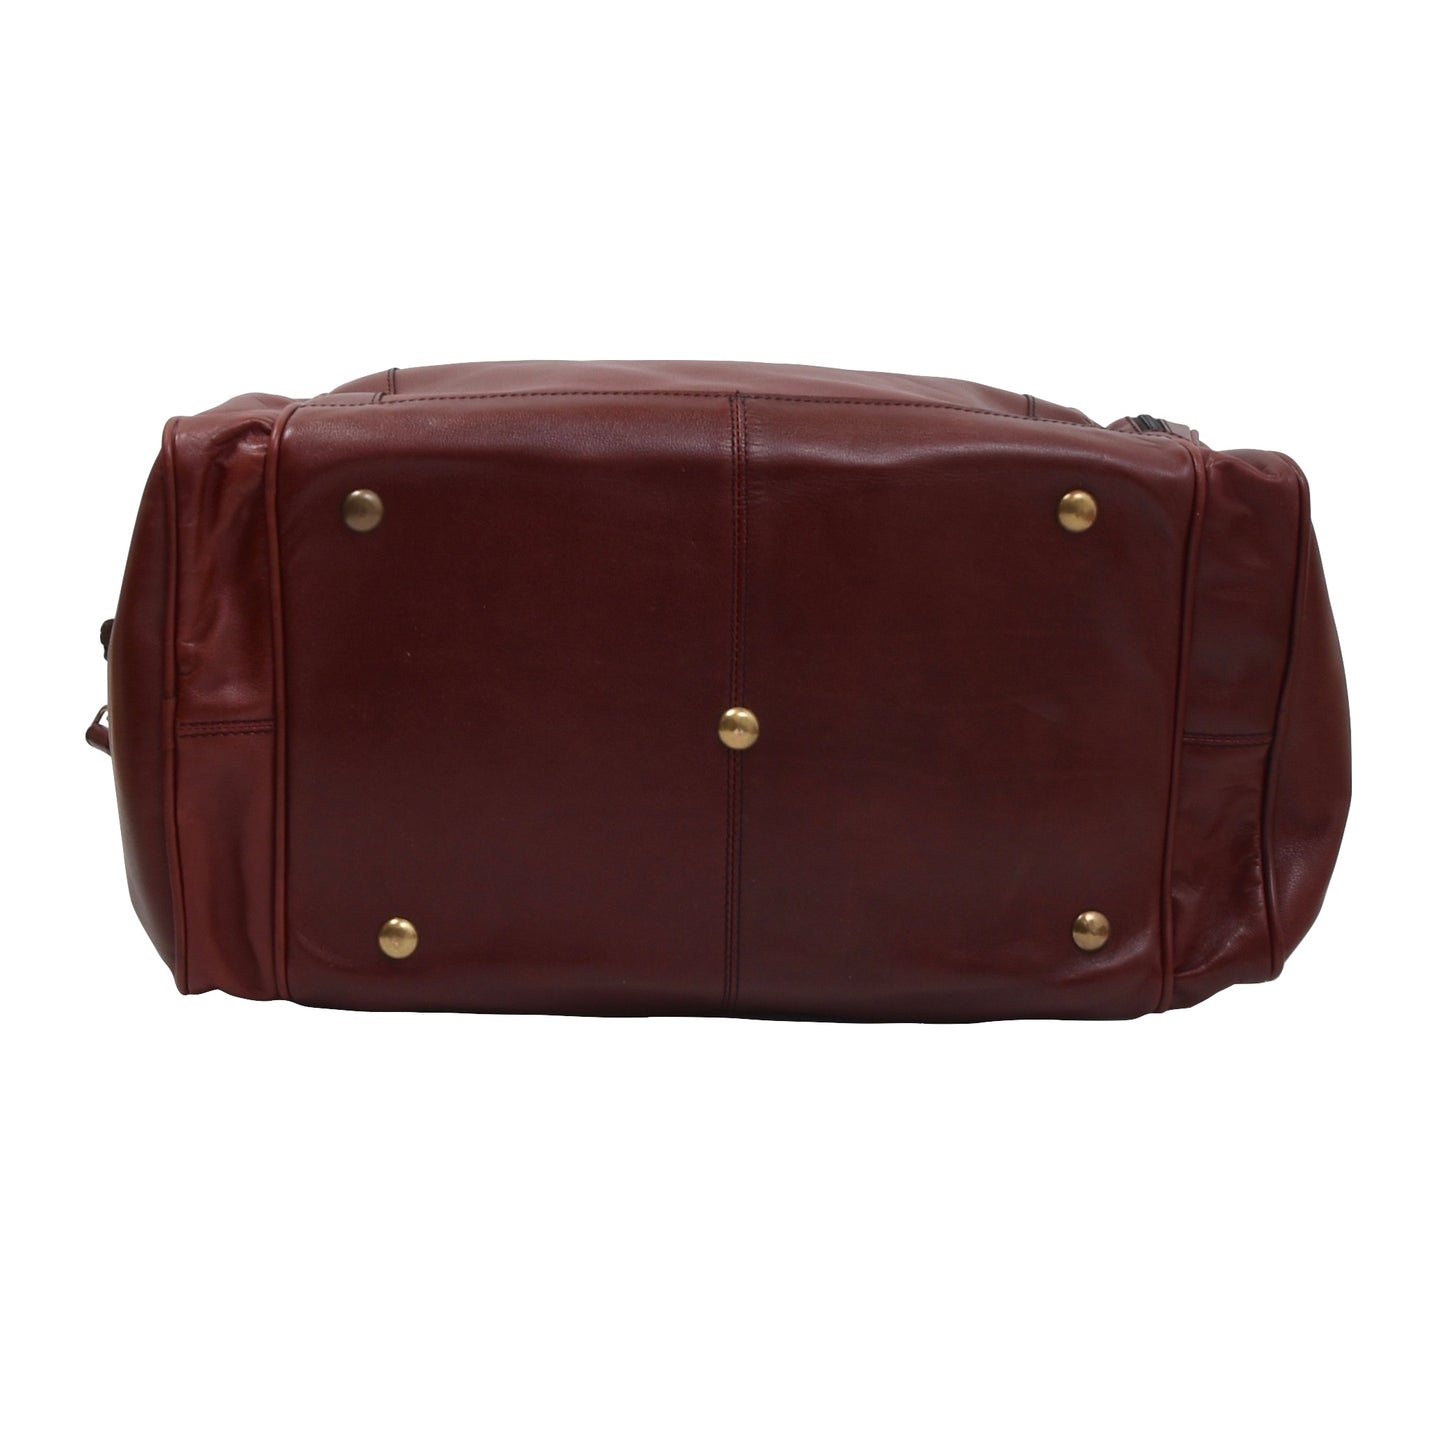 Vintage Leather Duffle Bag - Burgundy